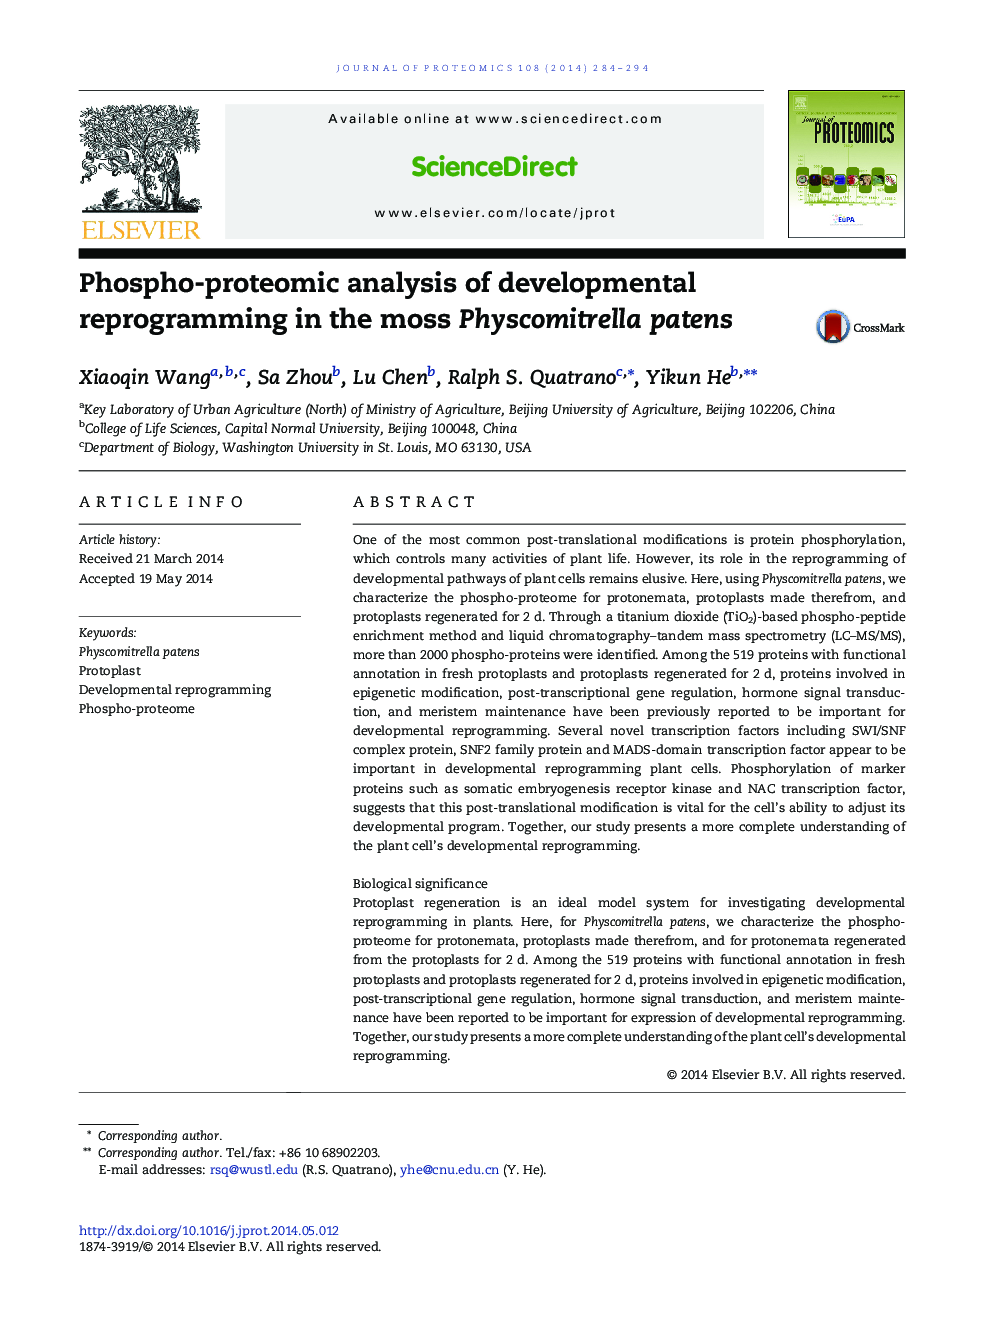 Phospho-proteomic analysis of developmental reprogramming in the moss Physcomitrella patens